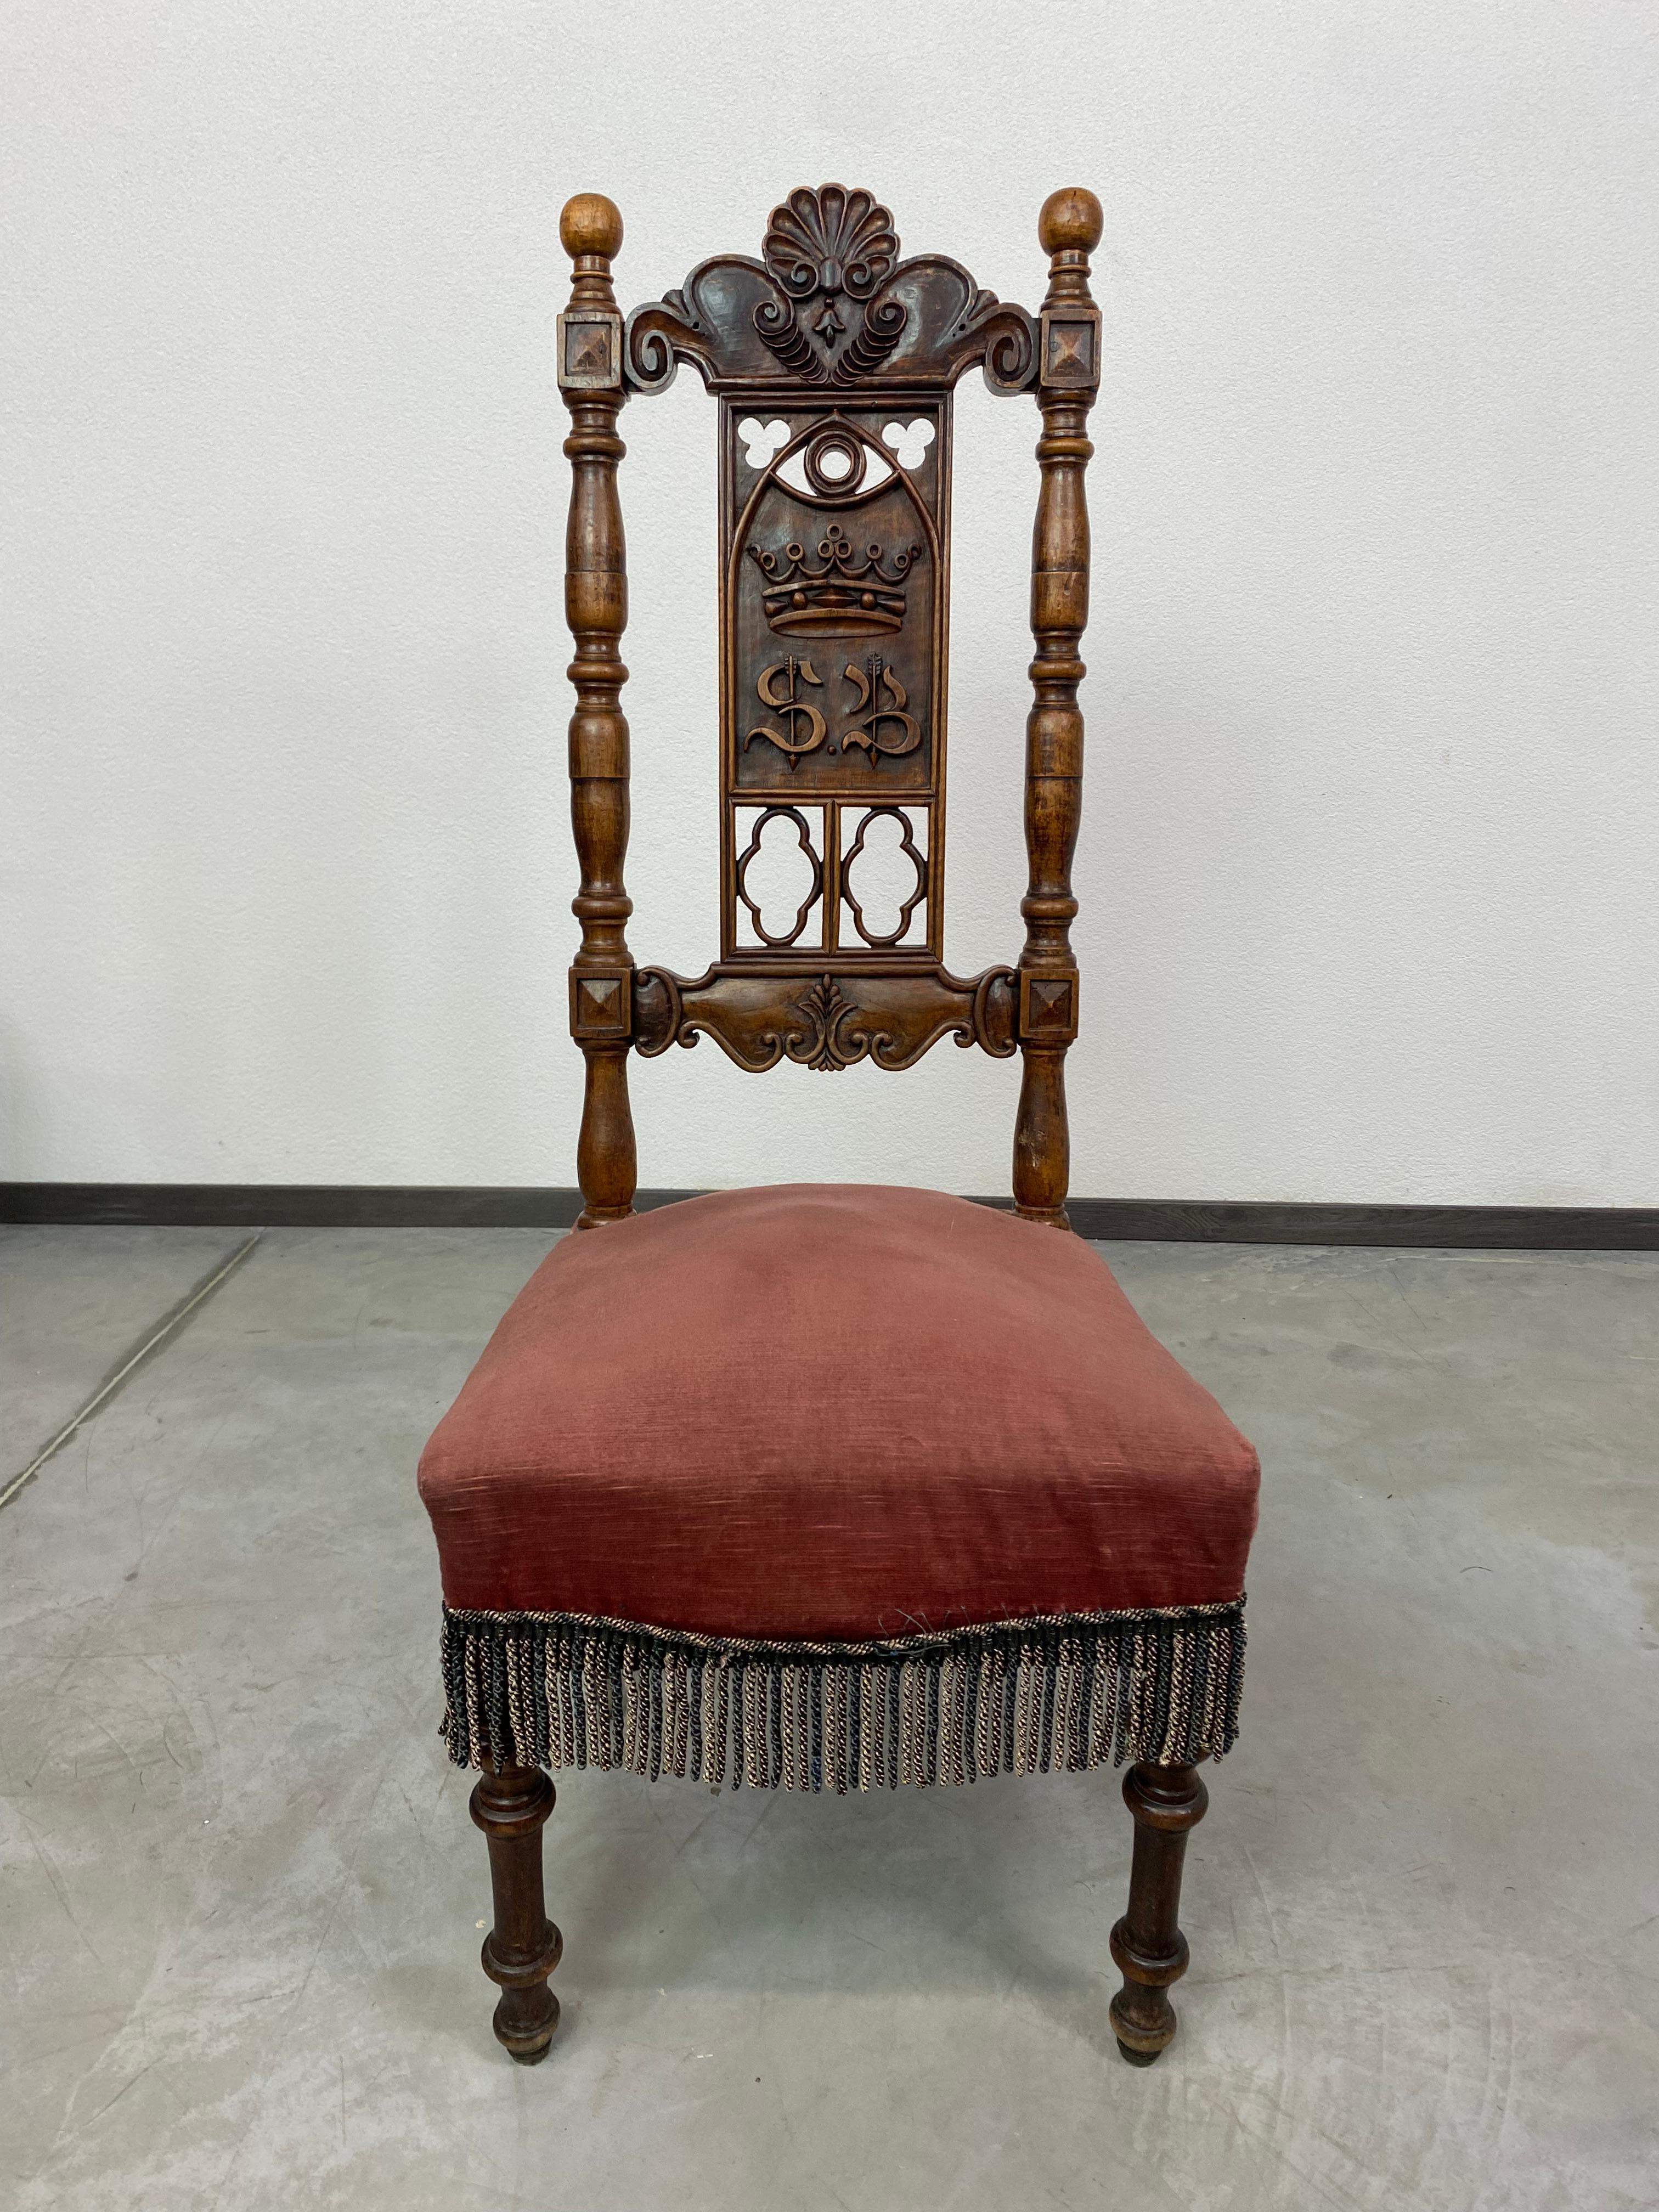 19th century desk chair in original vintage condition.